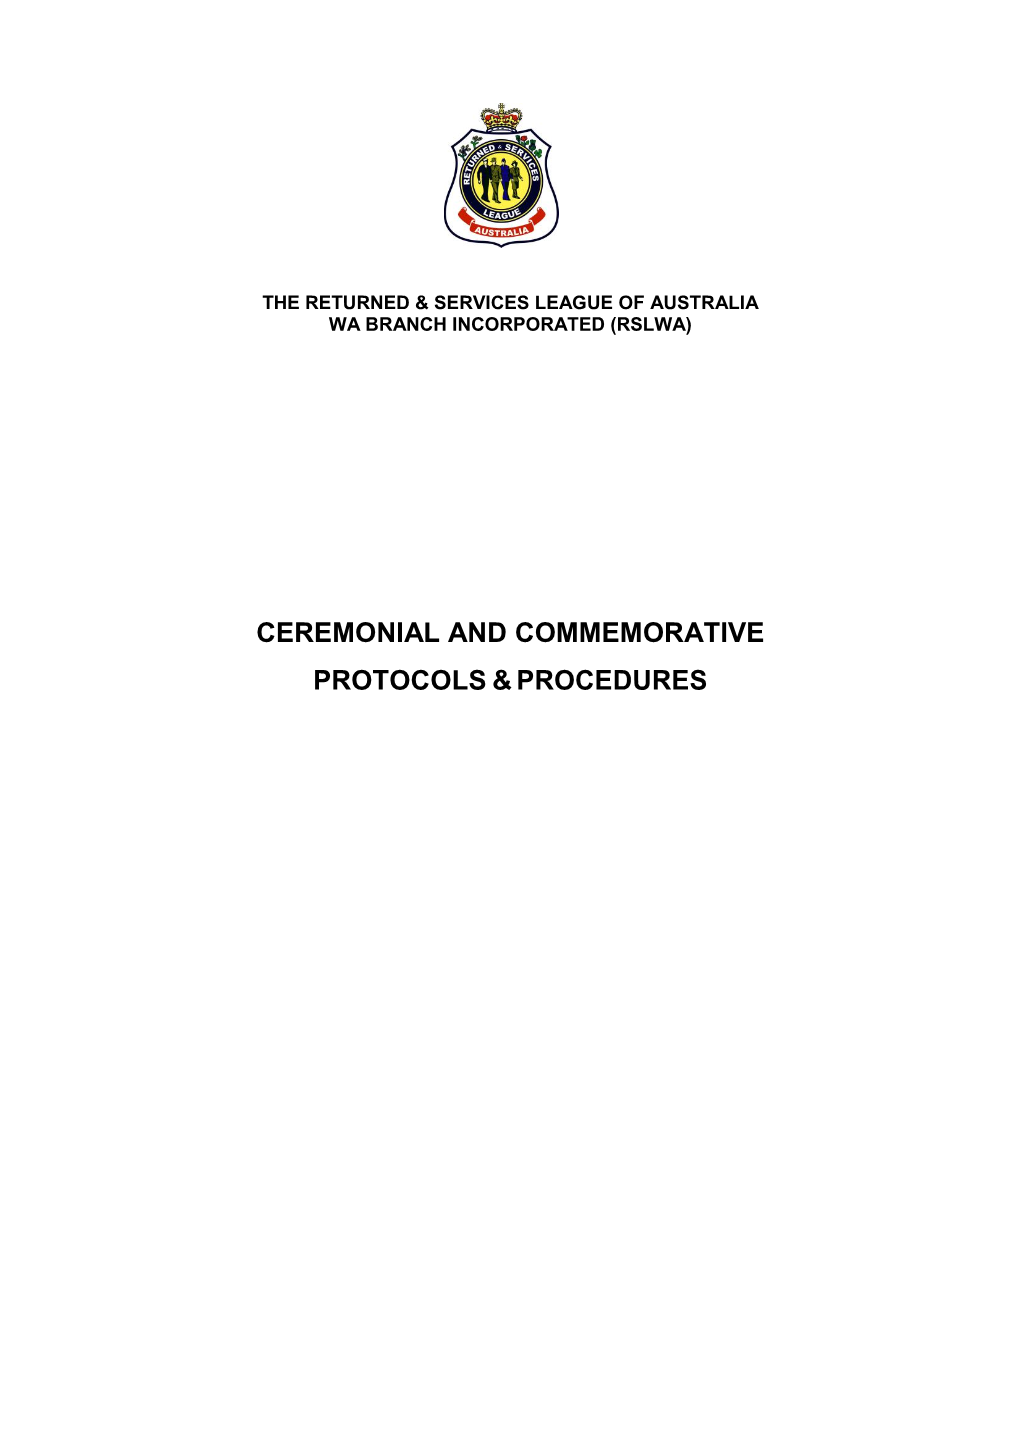 Ceremonial and Commemorative Protocols & Procedures